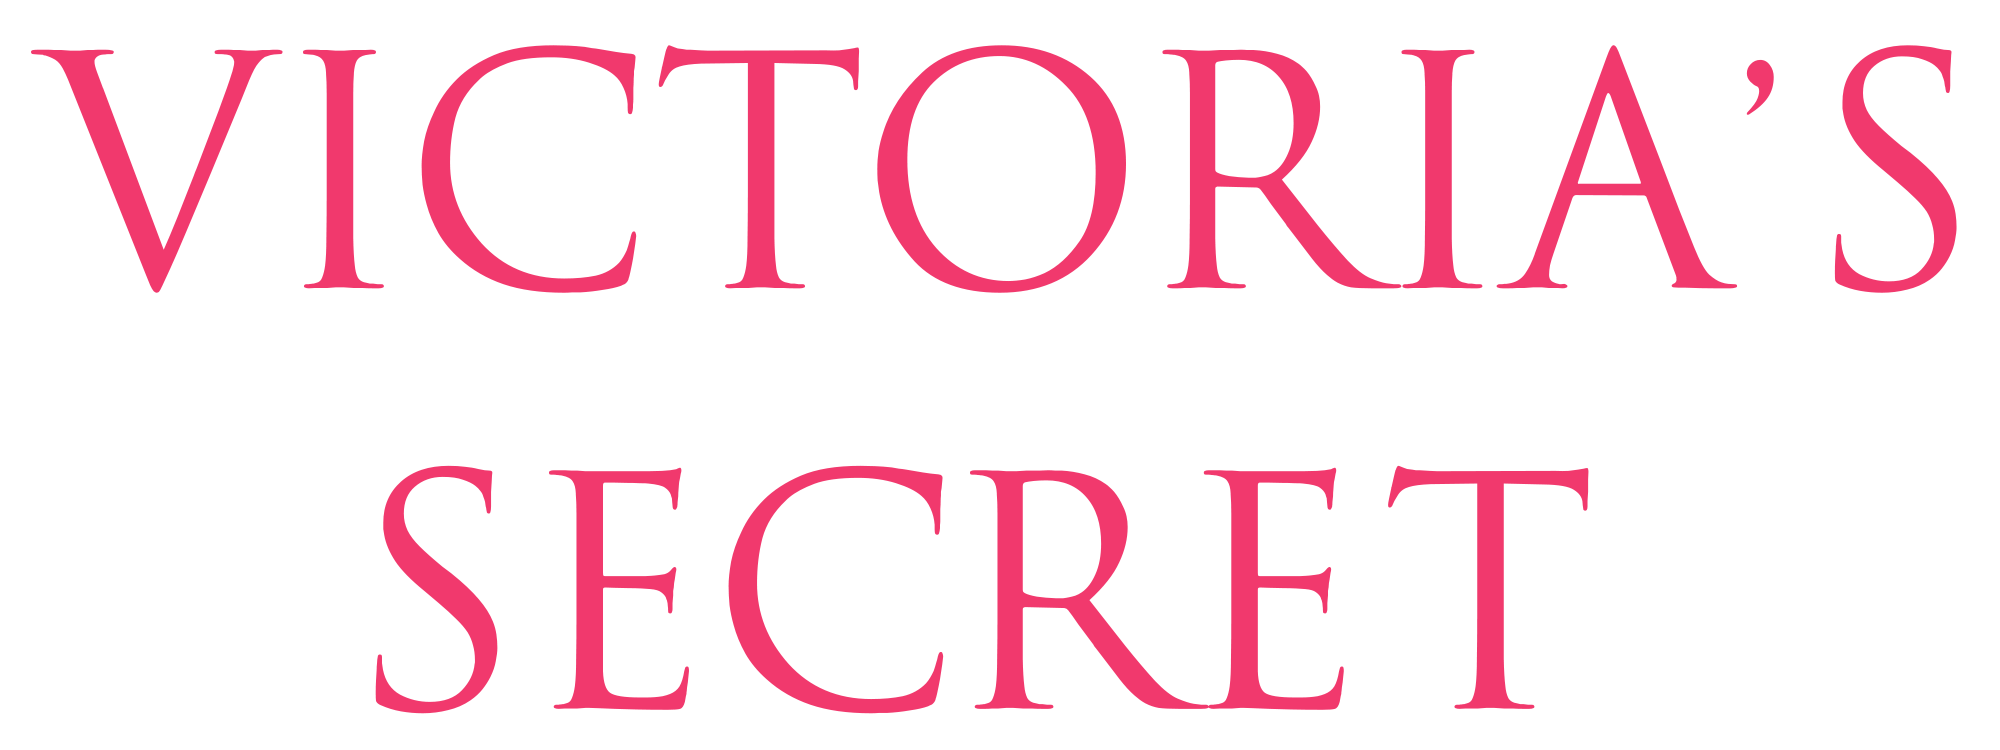 Victoria Secret Logo - Victoria's Secret.svg